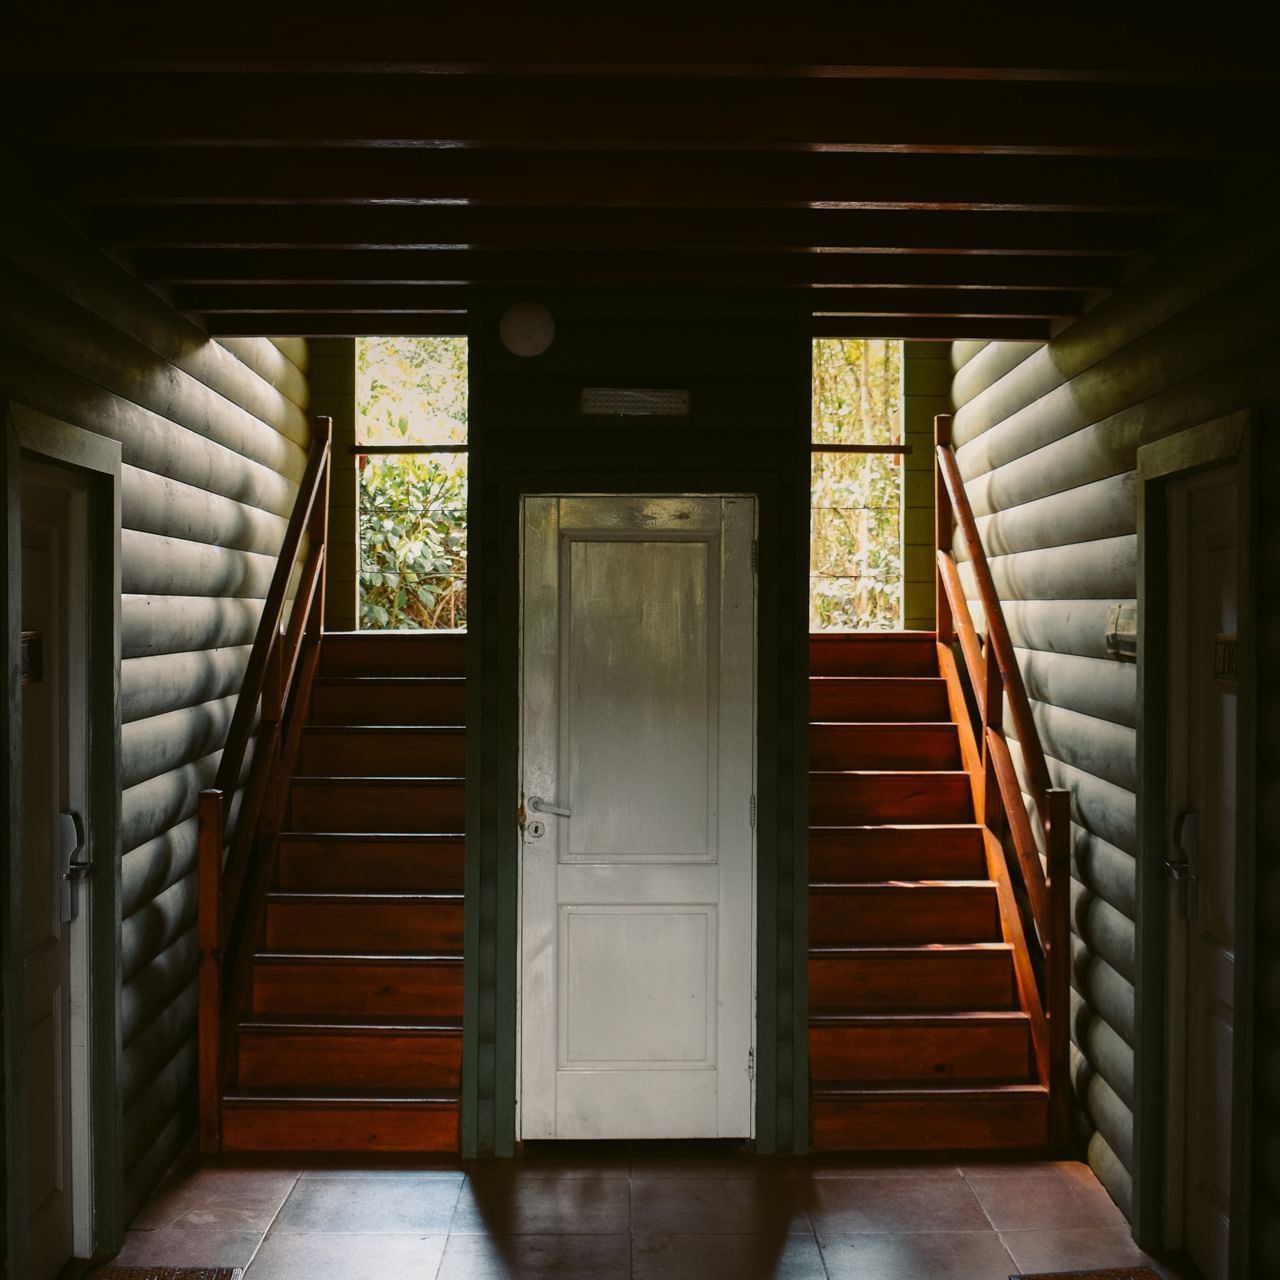 View of an indoor stairway at La Cantera Lodge de Selva